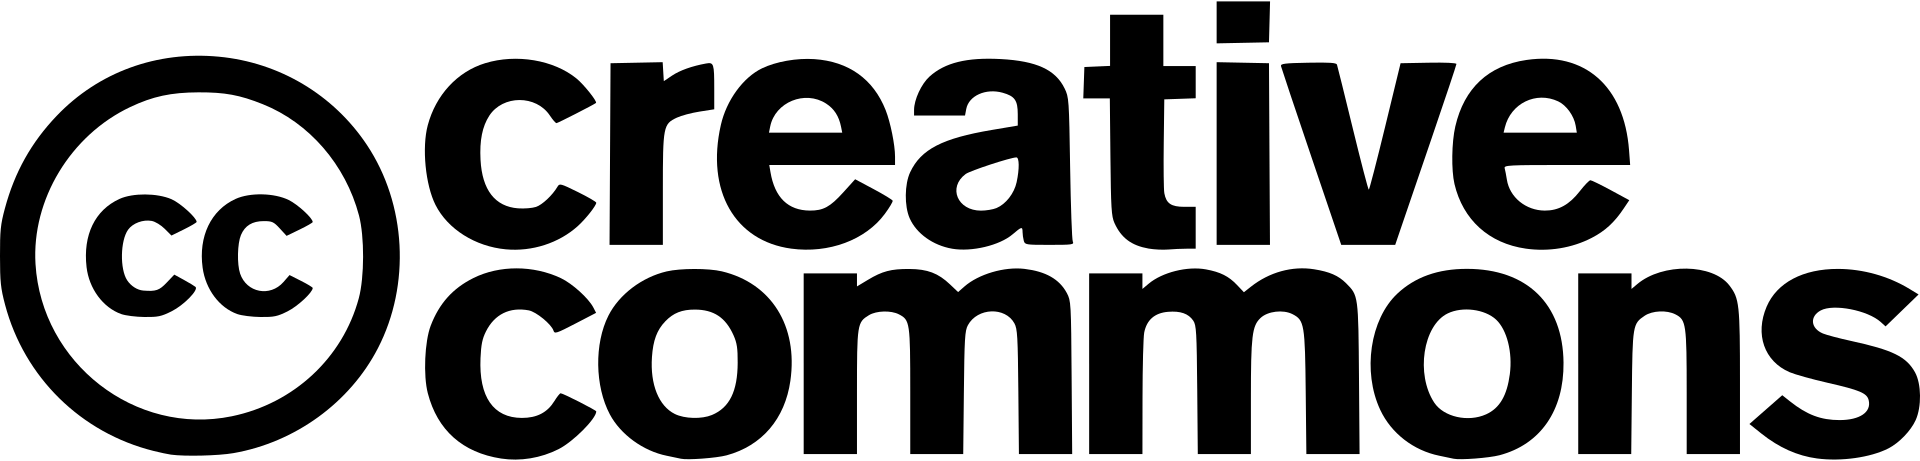 CC logo.svg